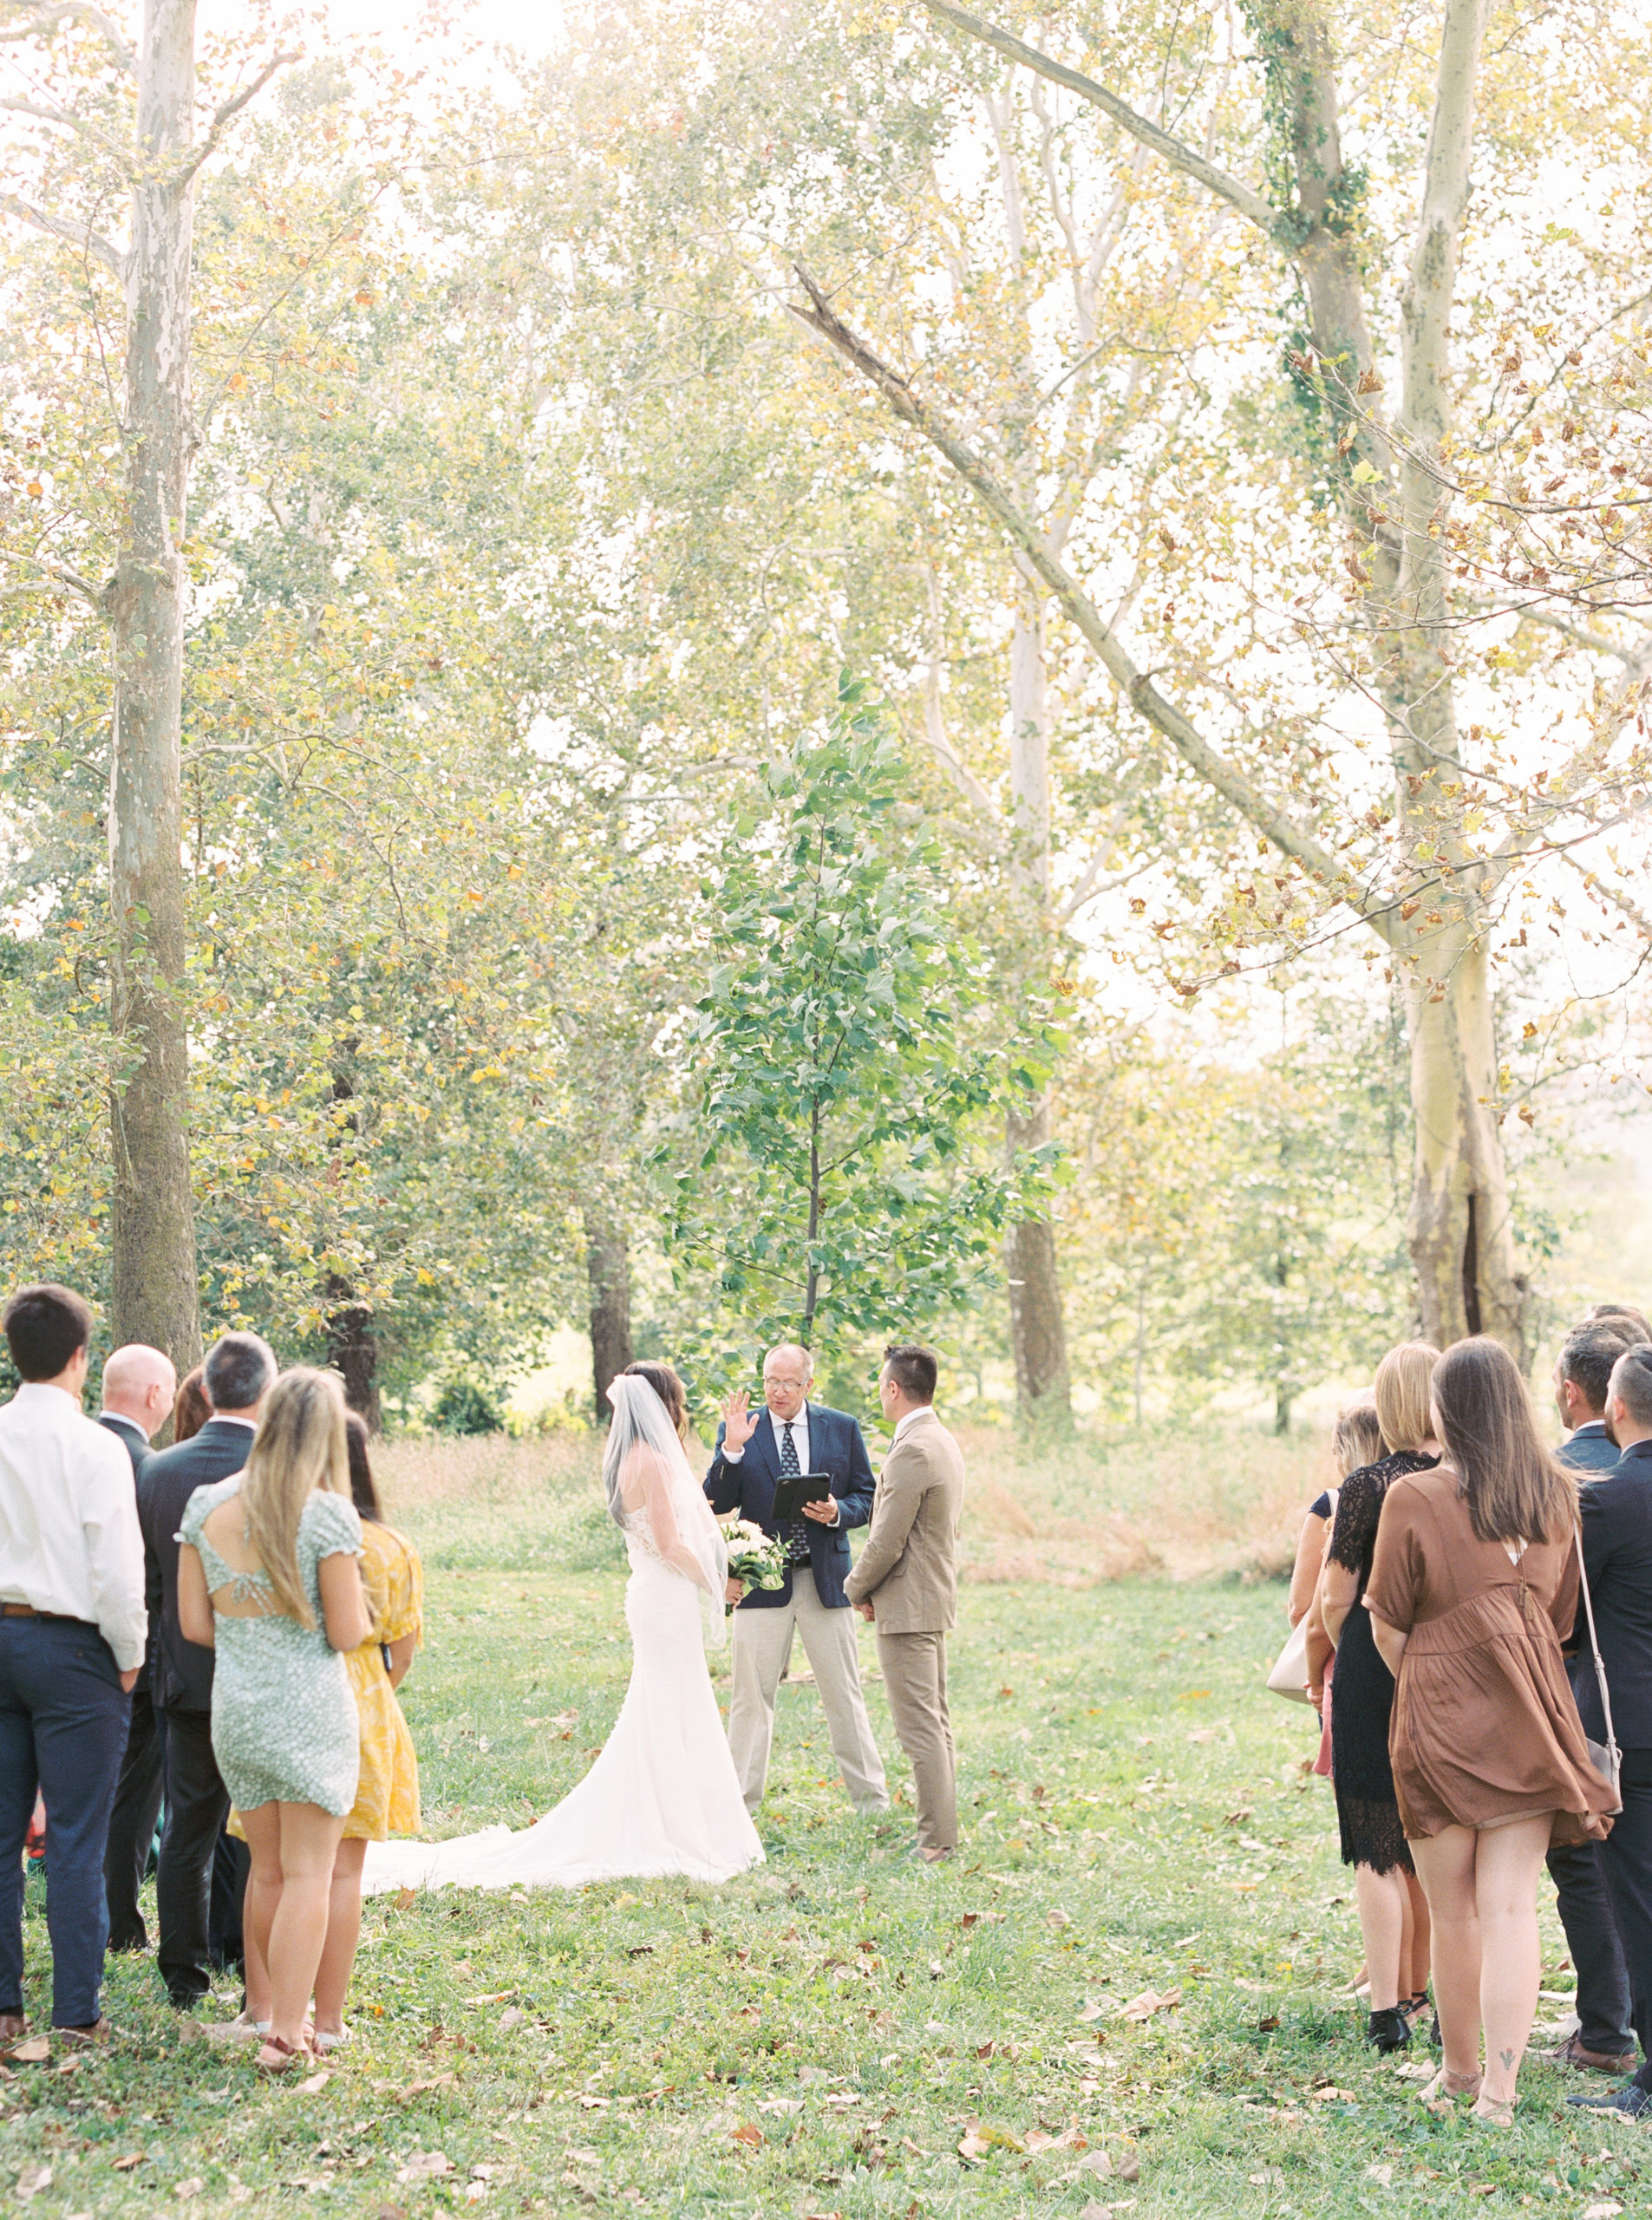 Fall Forest Park Wedding Ceremony photos on film